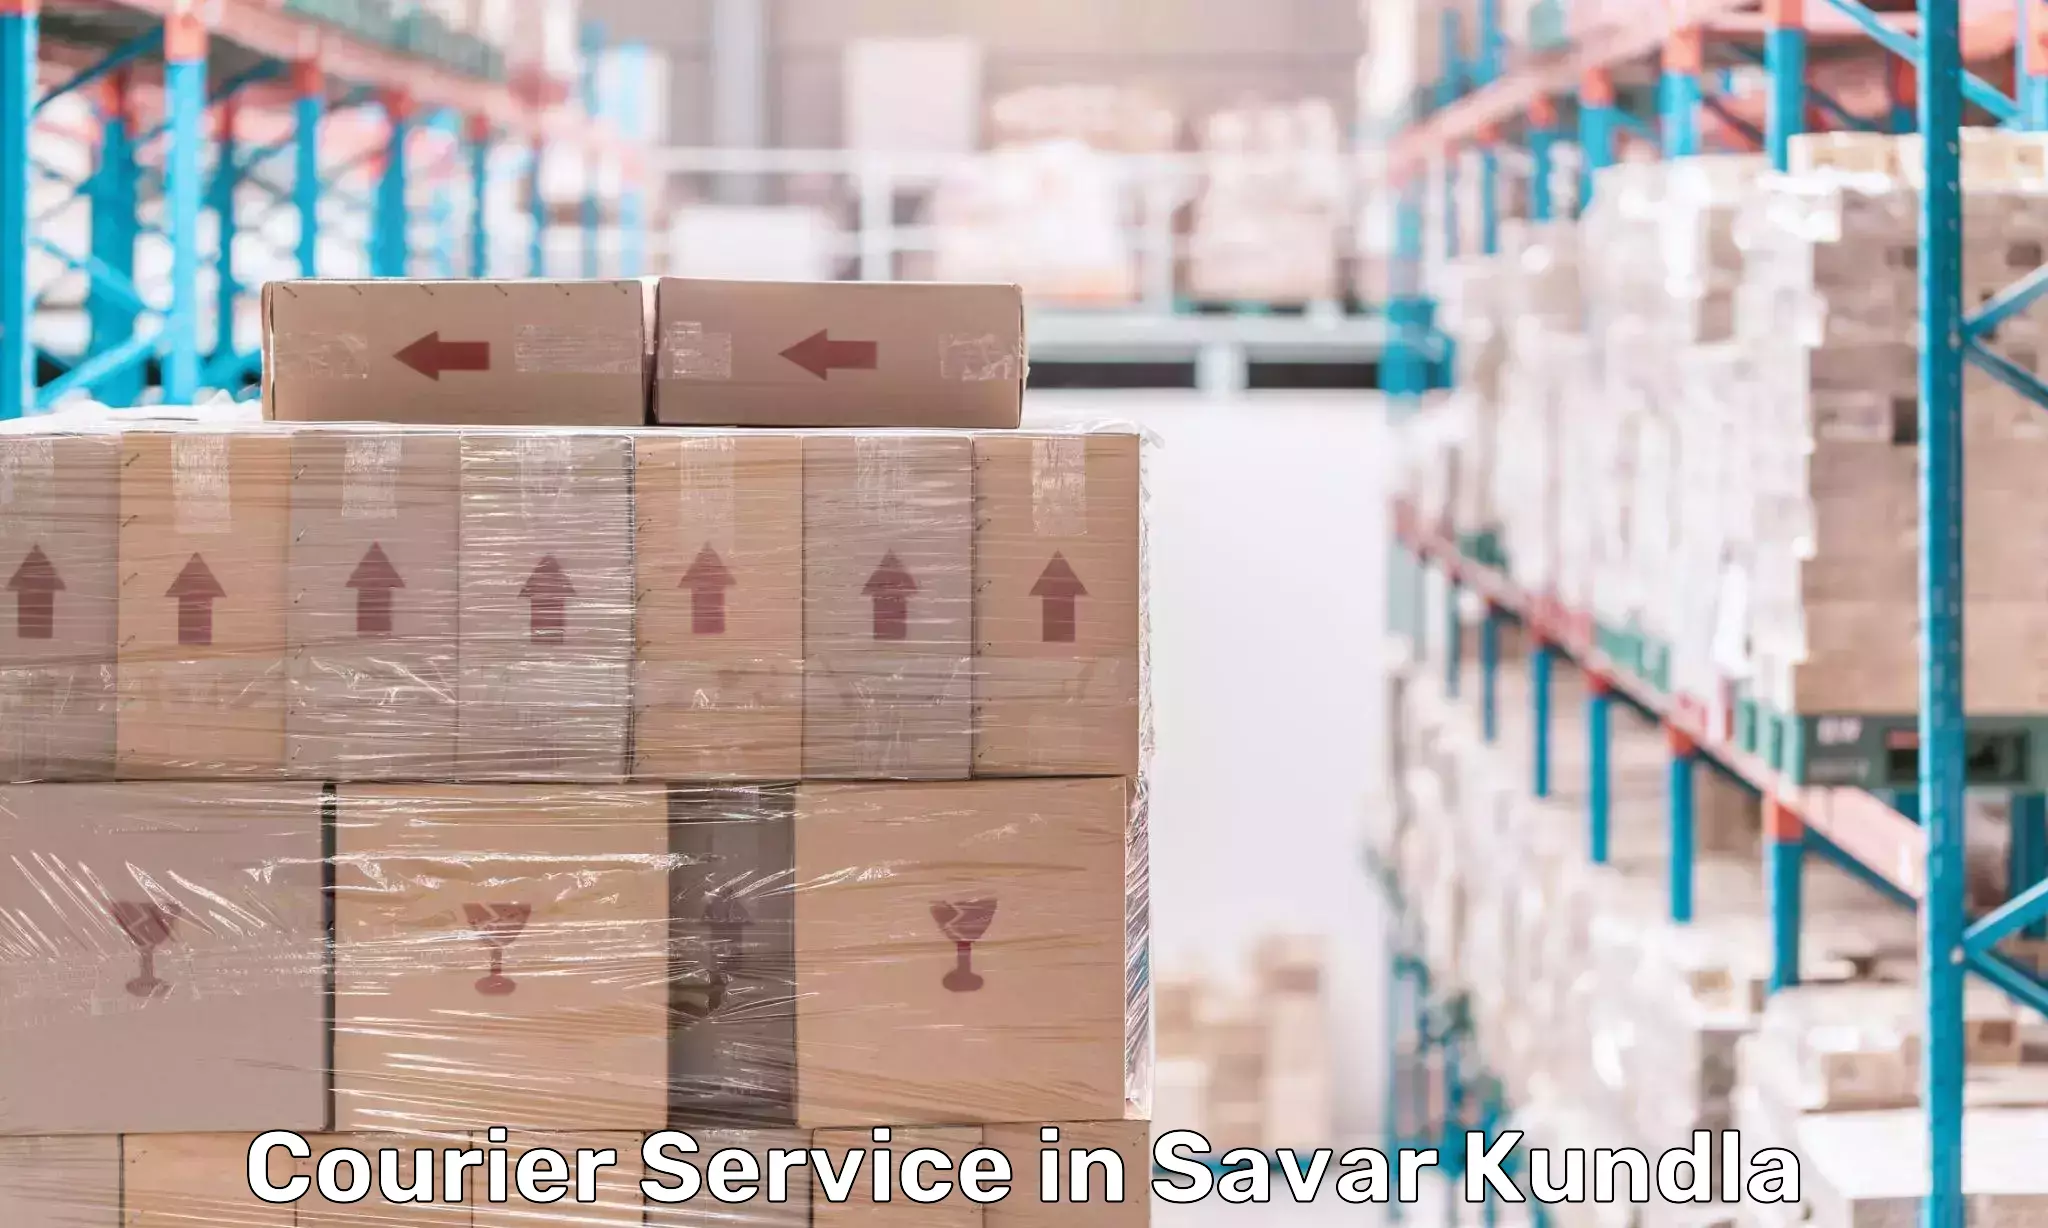 Comprehensive logistics in Savar Kundla